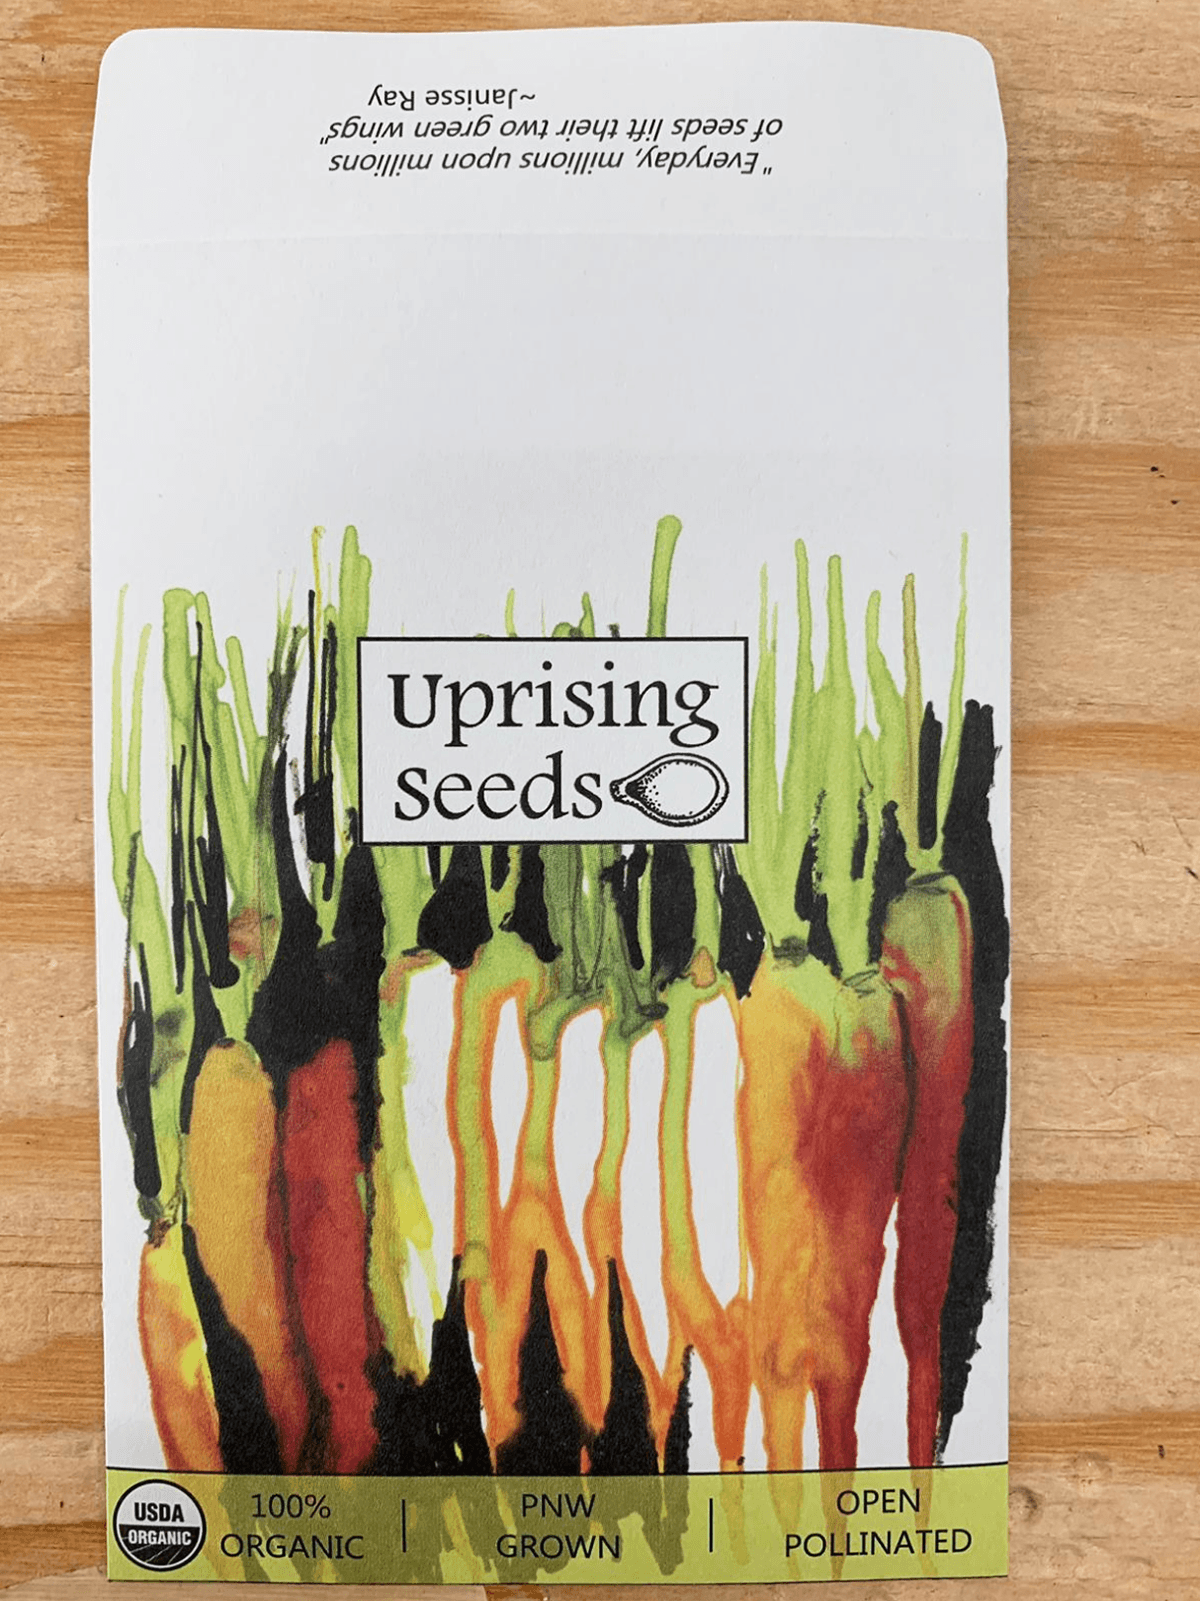 ILLUSTRATION  francesca ballarini watercolors Drawing  artistic label illustrated label illustrated packaging ink organic seeds uprising seeds